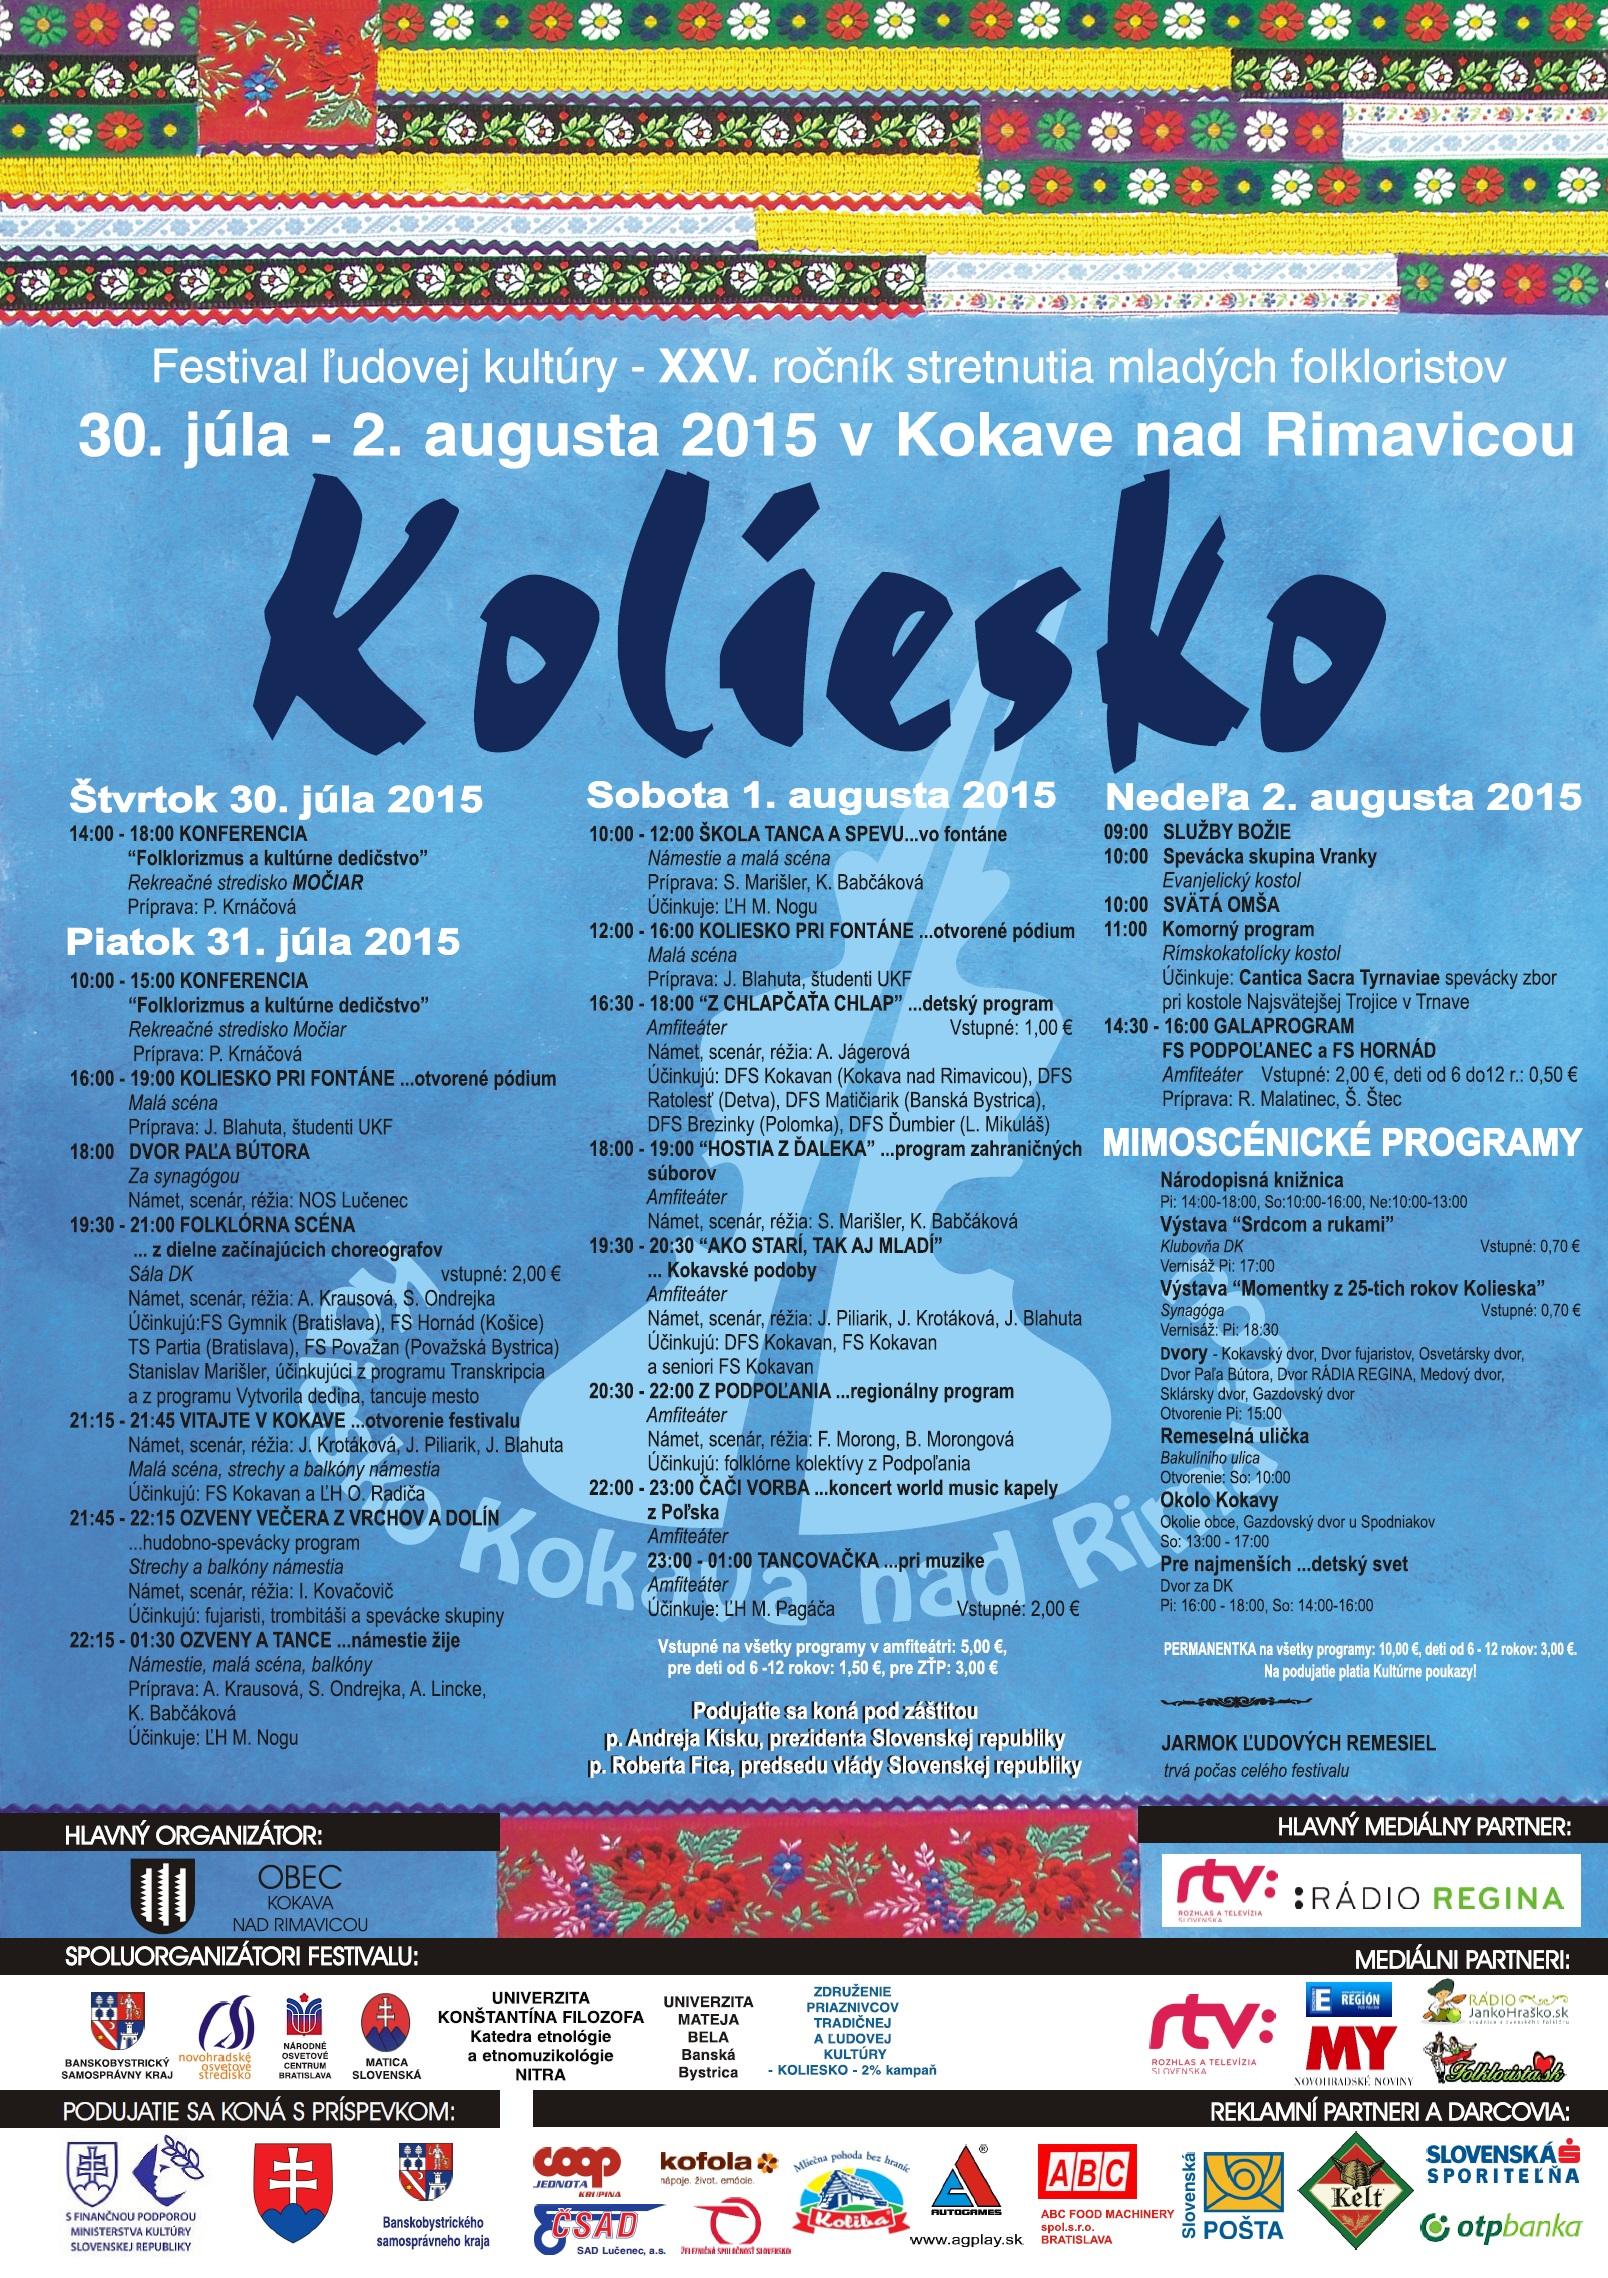 Koliesko 2015 Kokava nad Rimavicou - XXV. ronk Festivalu udovej kultry